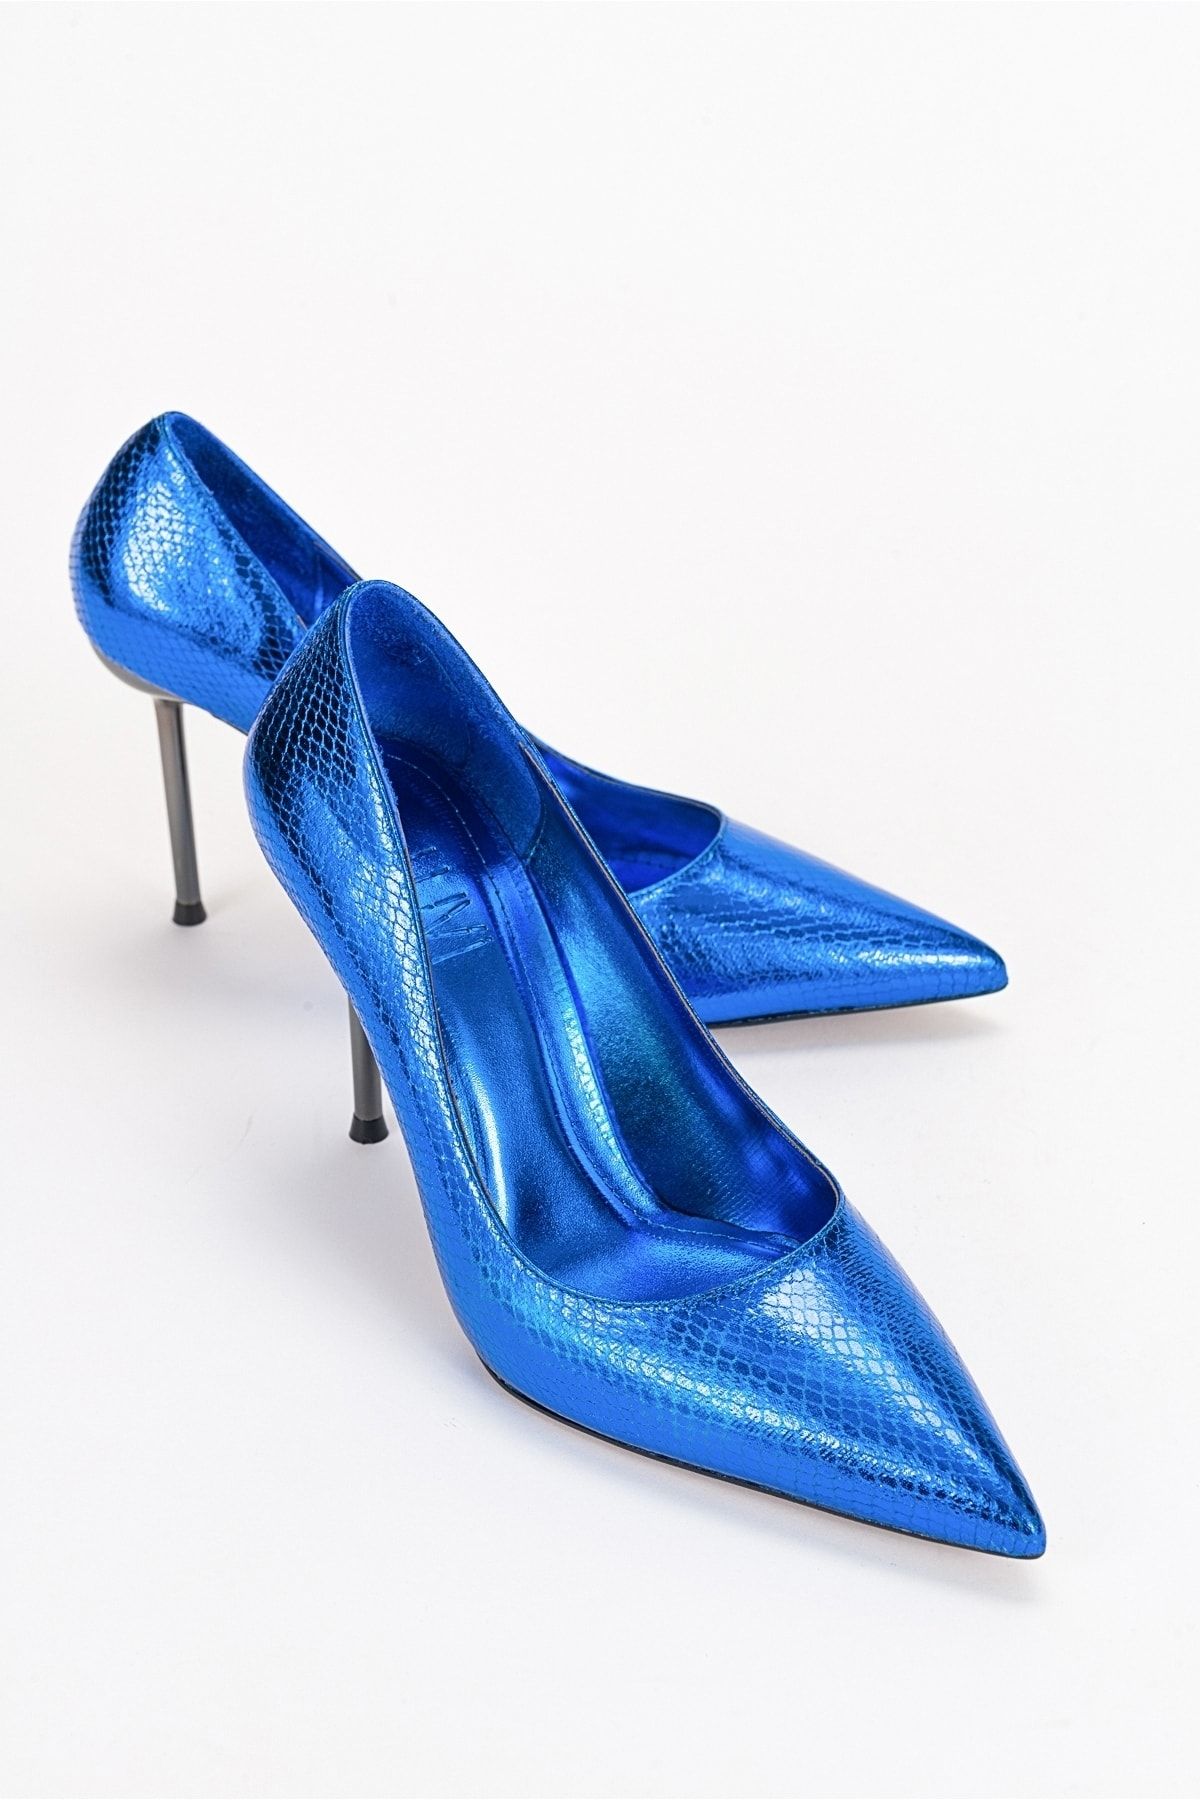 luvishoes Palmera Sax Mavi Desenli Kadın Topuklu Ayakkabı